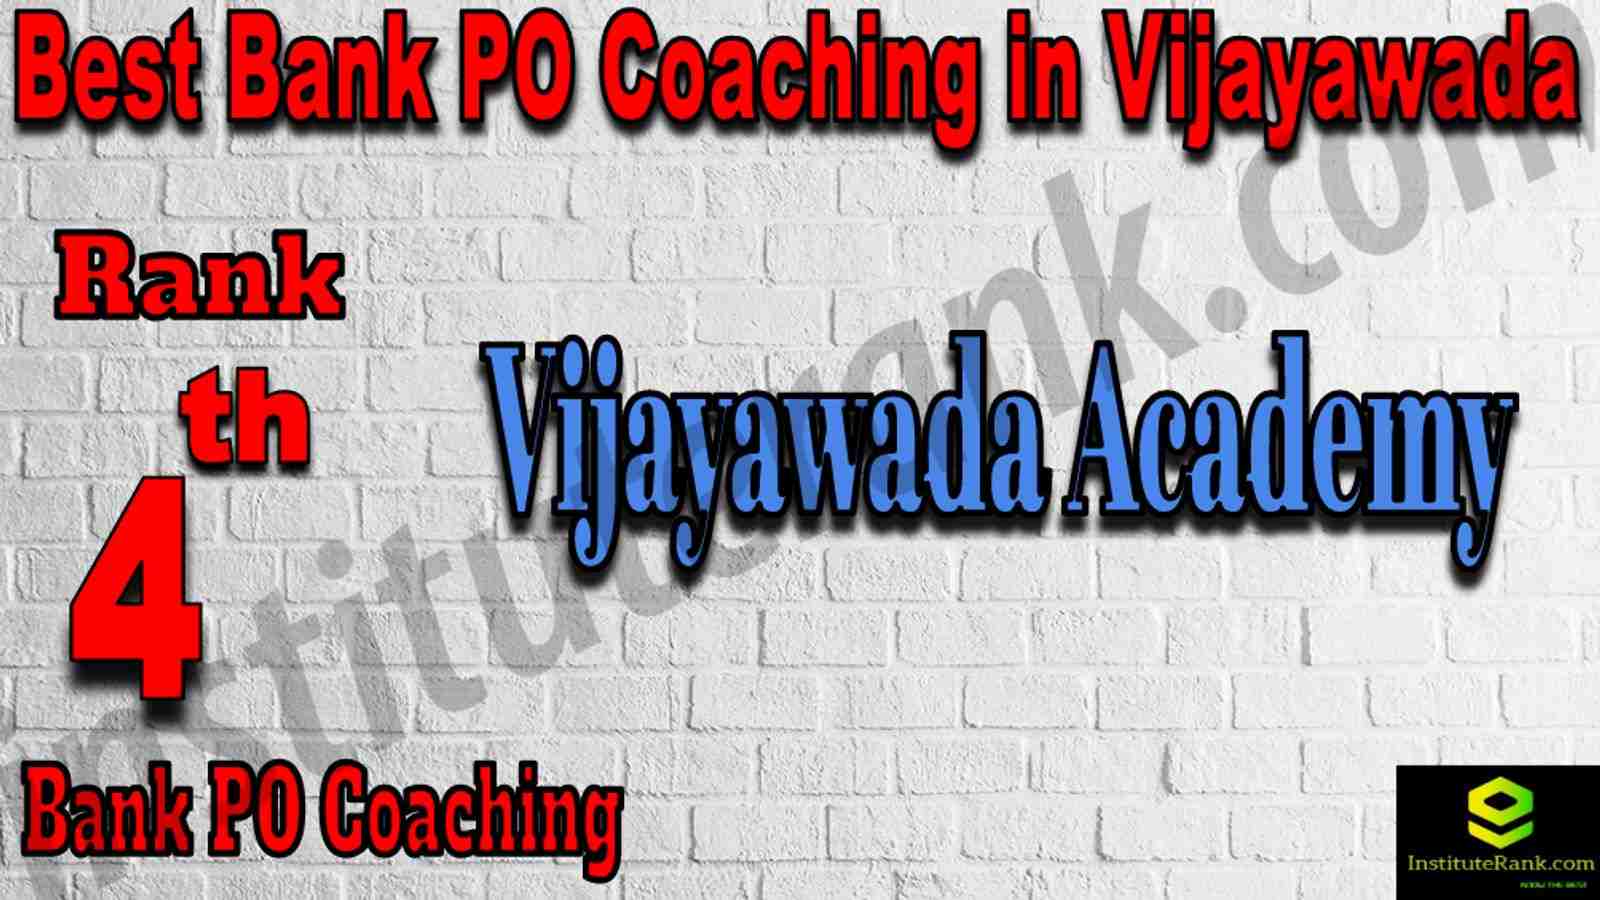 4th Best Bank PO Coaching in Vijayawada